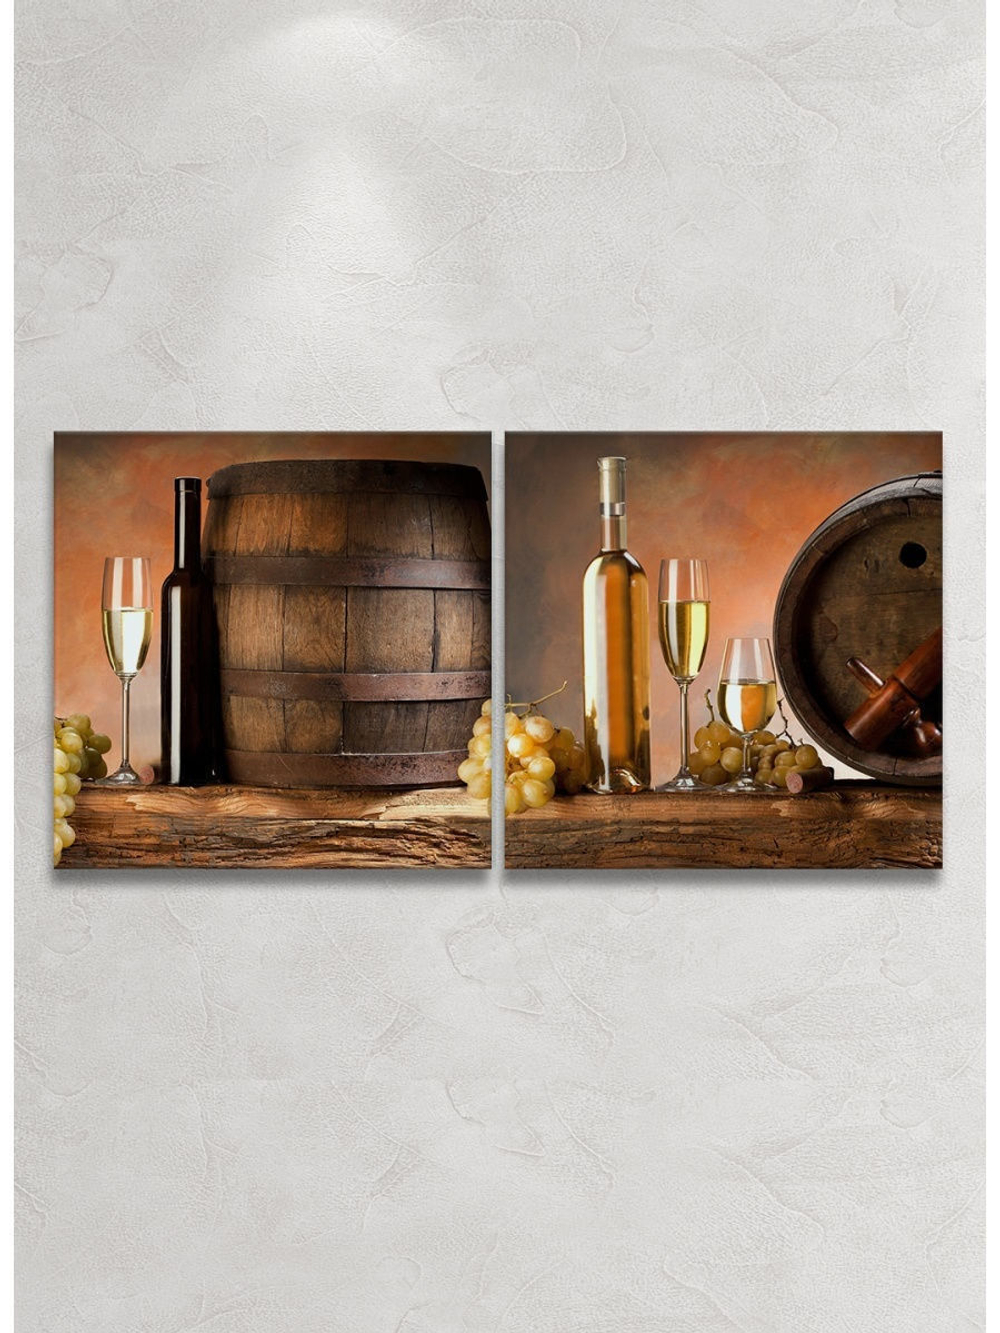 Картина на стекле/ Картина на стену Изысканное вино, 28х28см Декор для дома, подарок